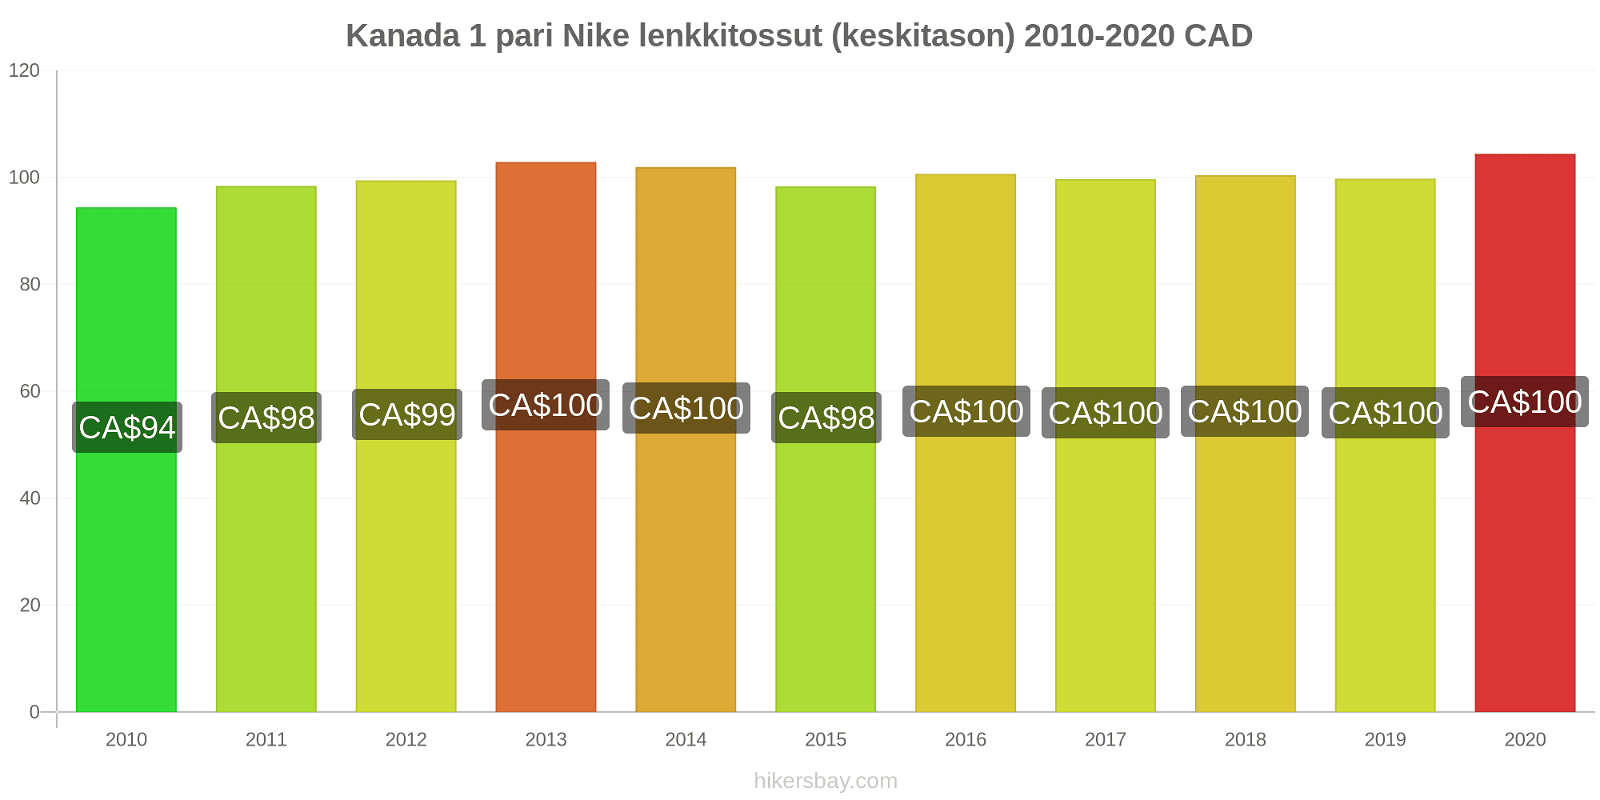 Kanada hintojen muutokset 1 pari Nike lenkkitossut (keskitason) hikersbay.com